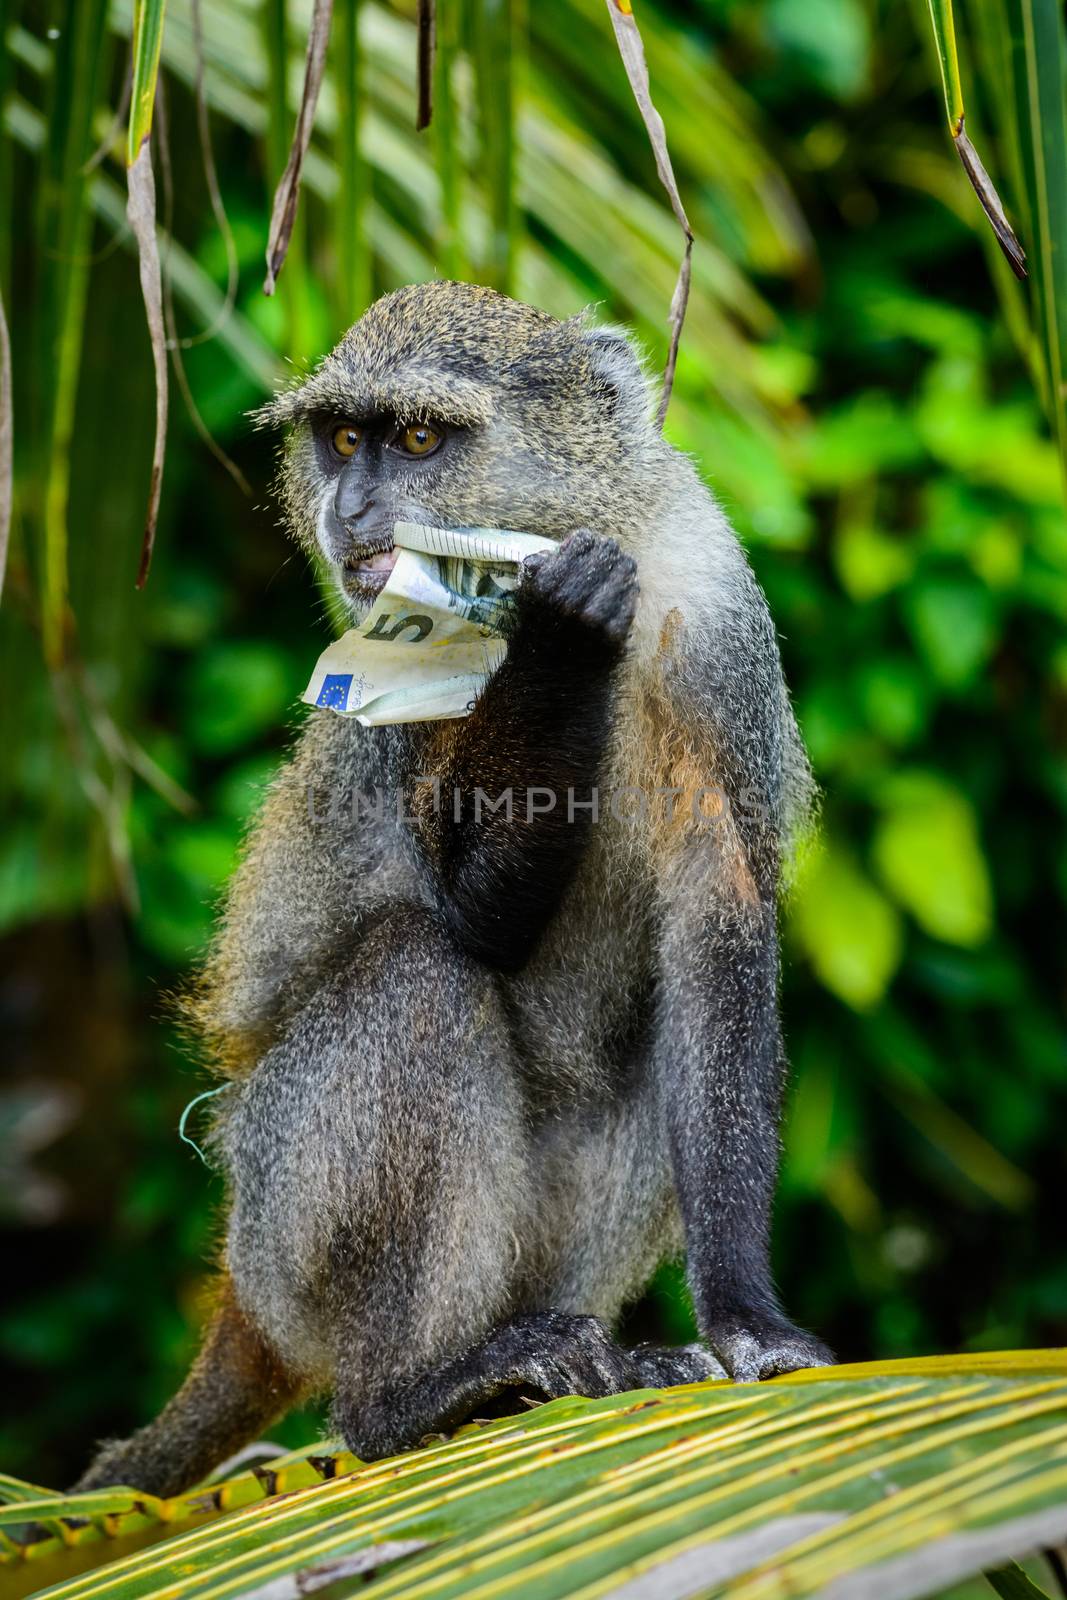 monkey hungry for money by Robertobinetti70